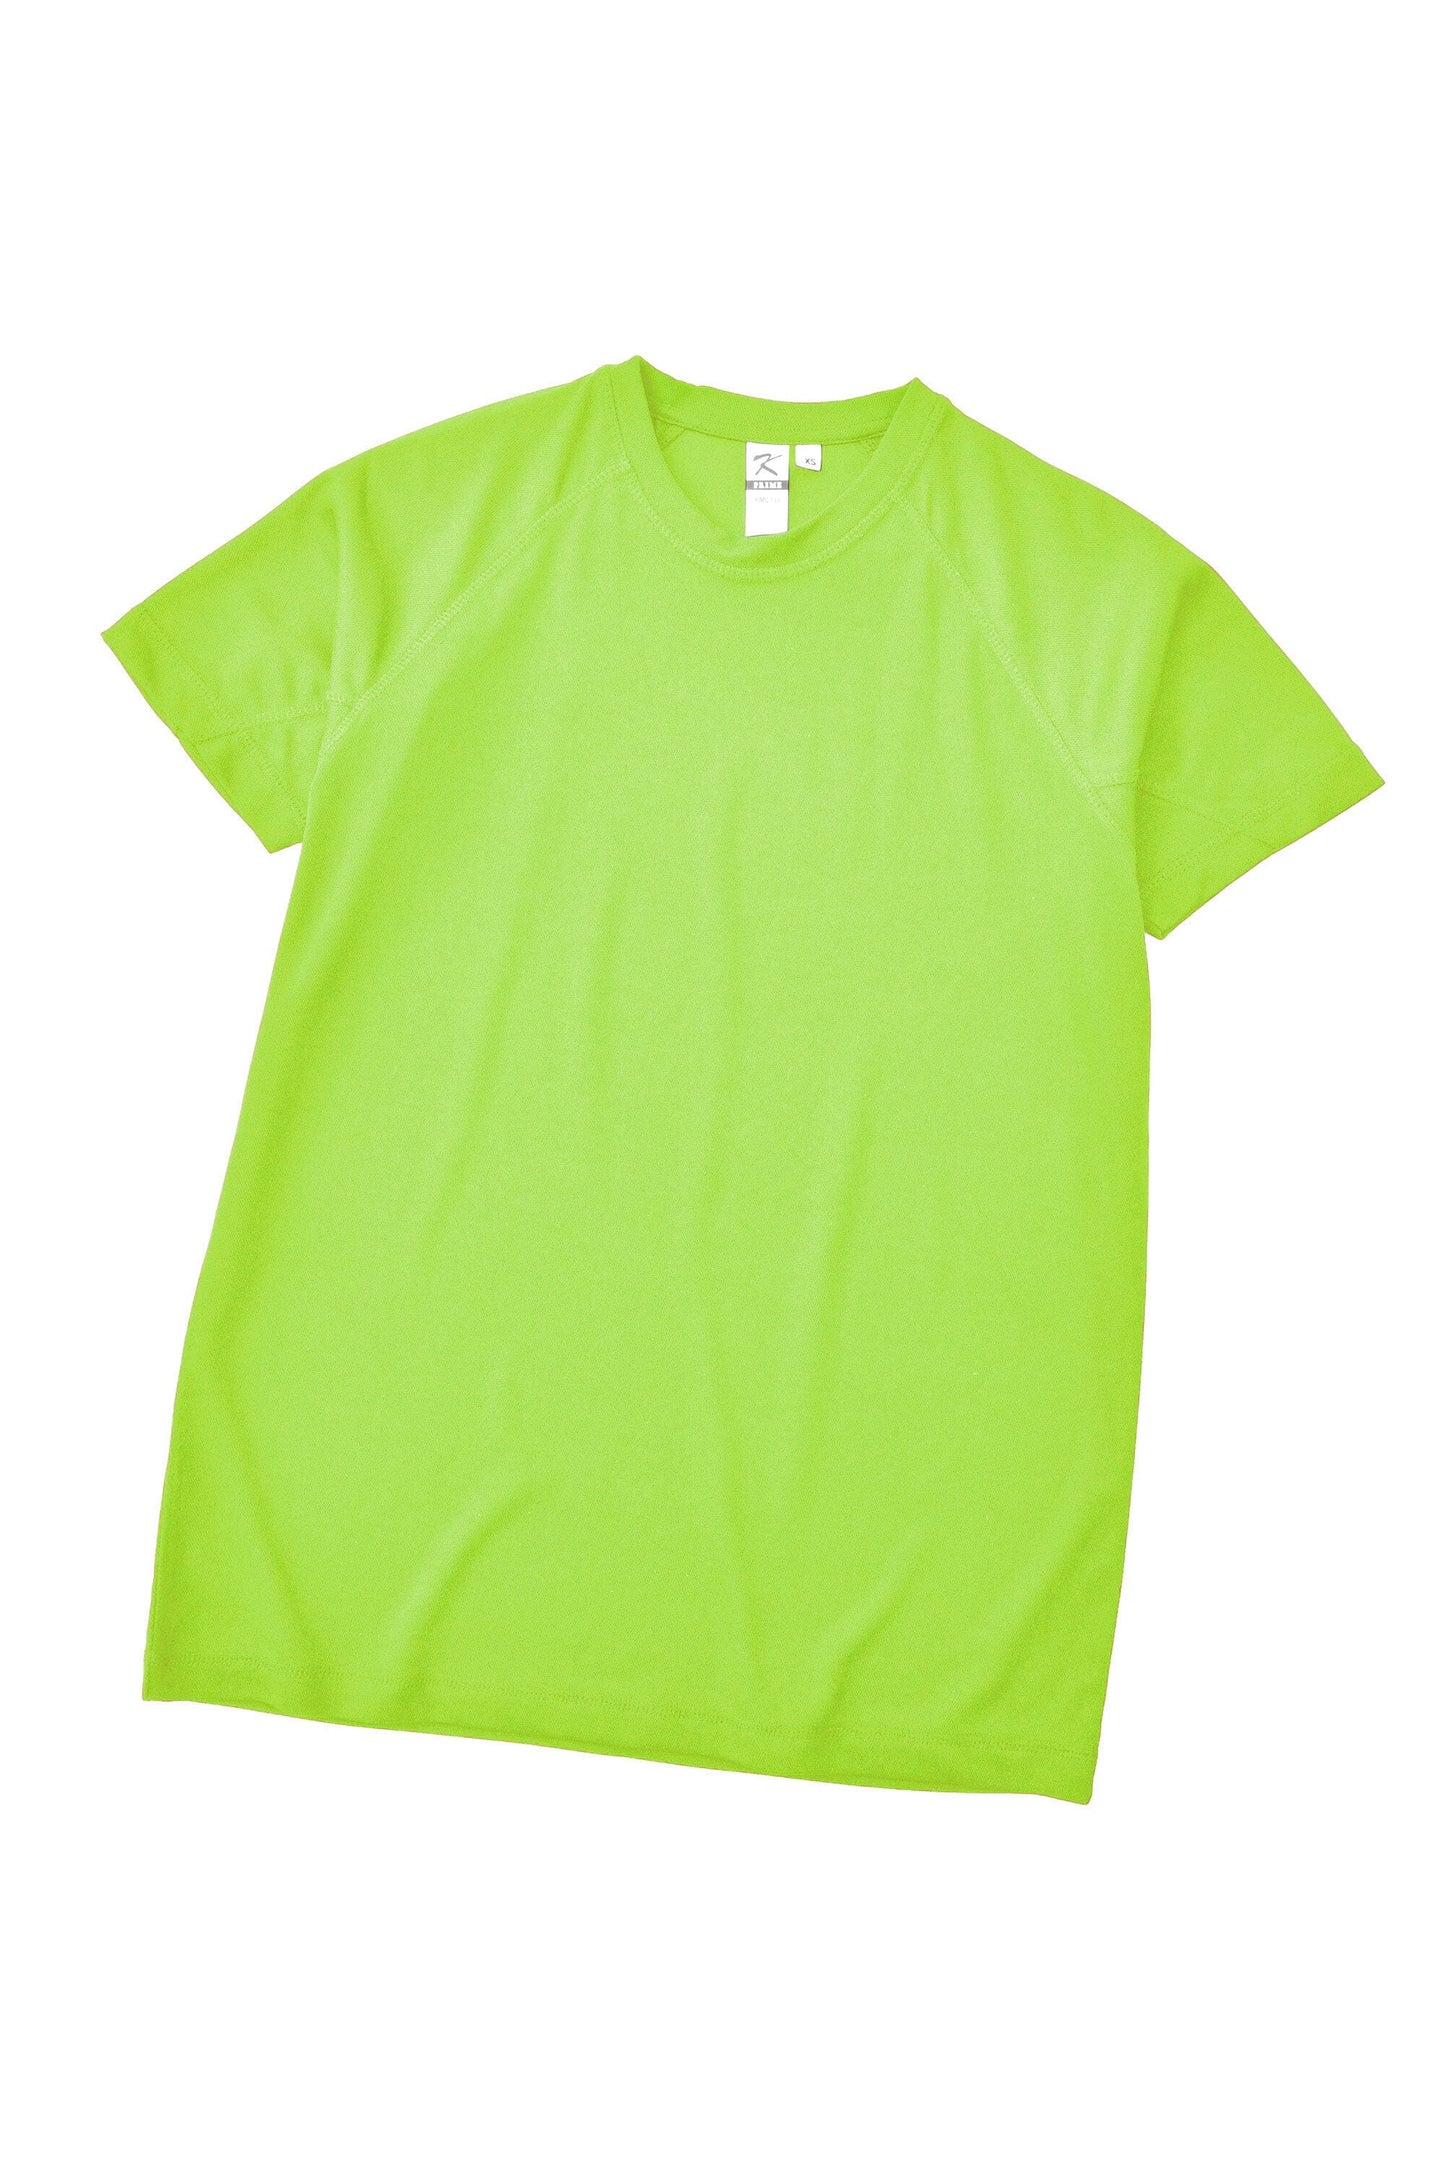 K Prime Kid's Reglan Sleeve Solid Design Minor Fault Tee Shirt